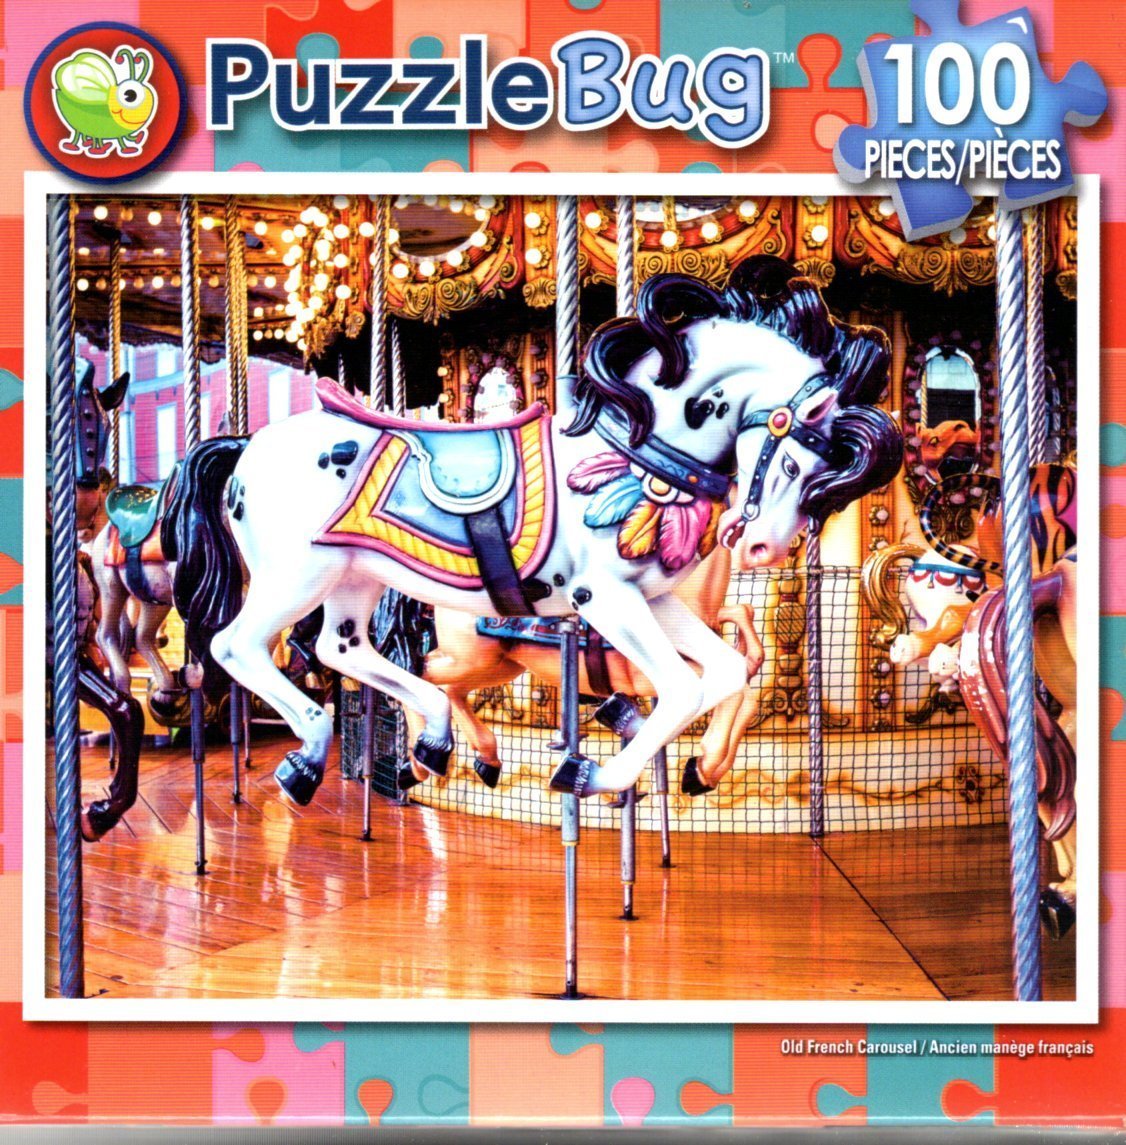 Puzzlebug Old French Carousel Piece Jigsaw Puzzle PSexiezPix Web Porn pic photo